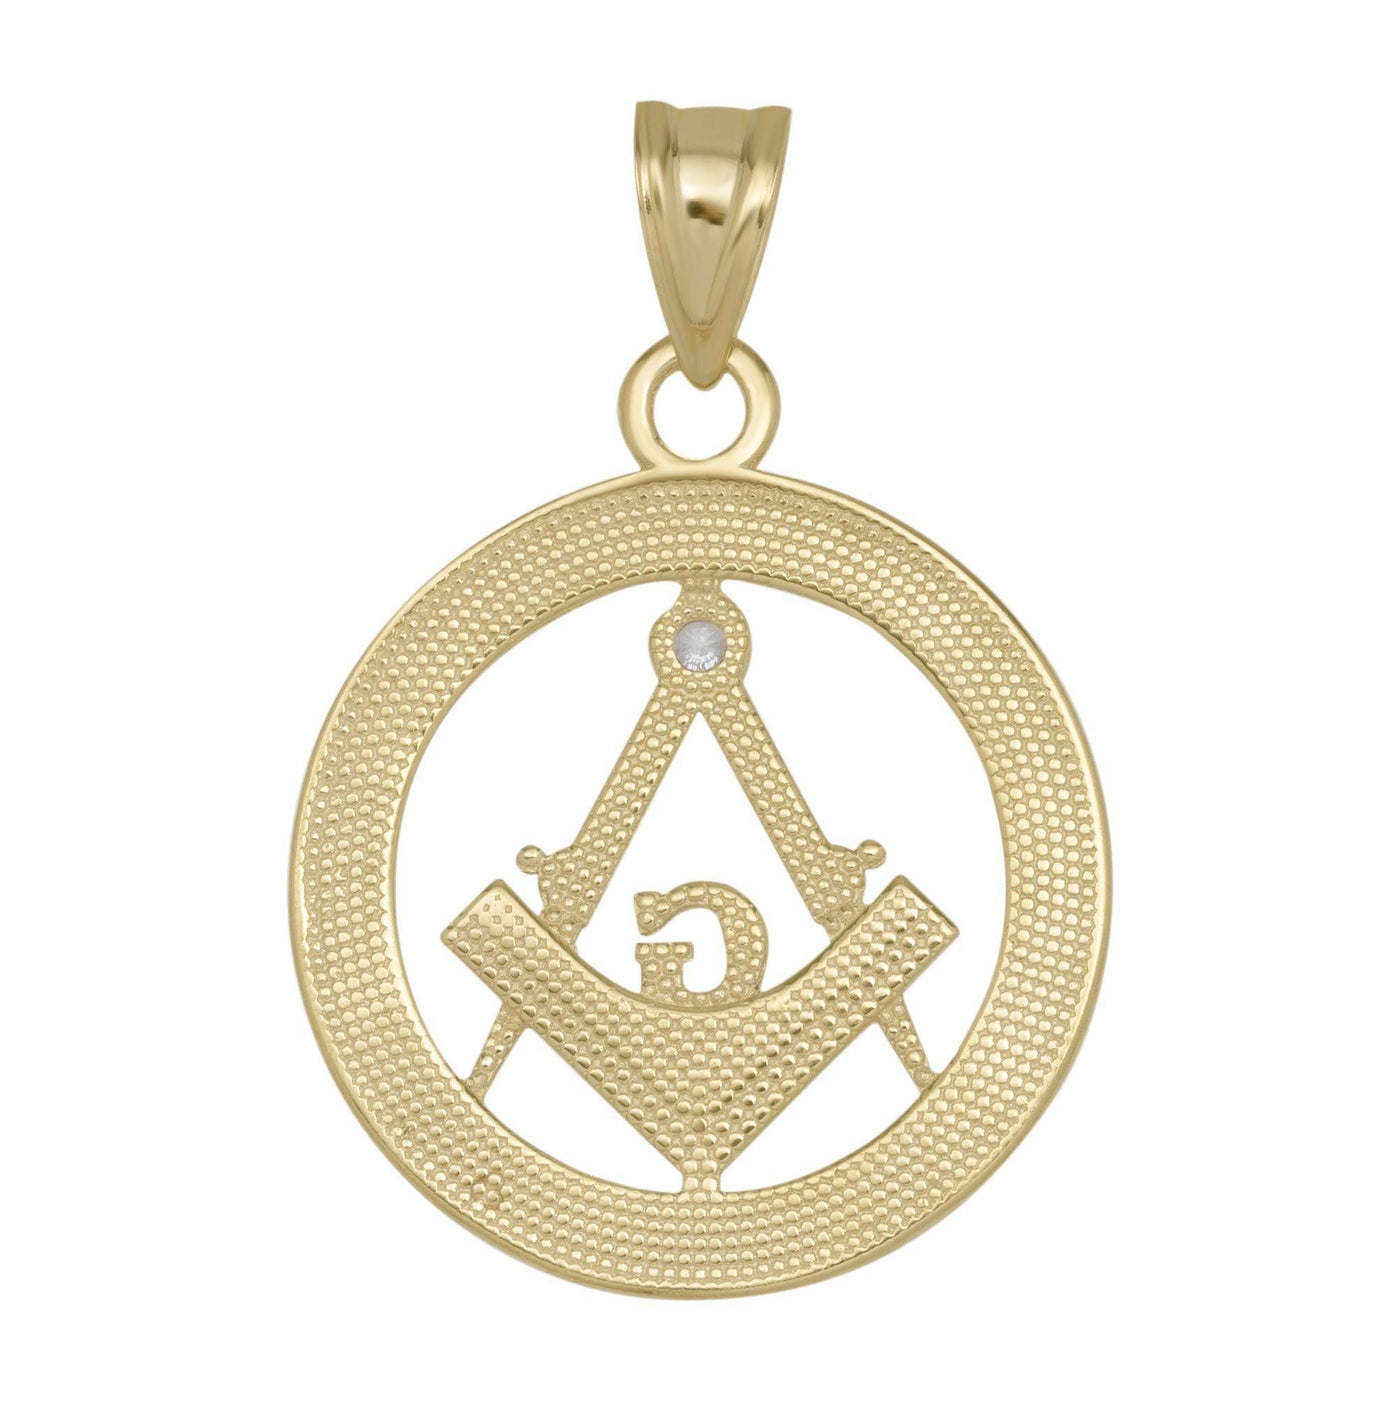 The Square and Compasses Masonic CZ Pendant Solid 10K Yellow Gold - bayamjewelry